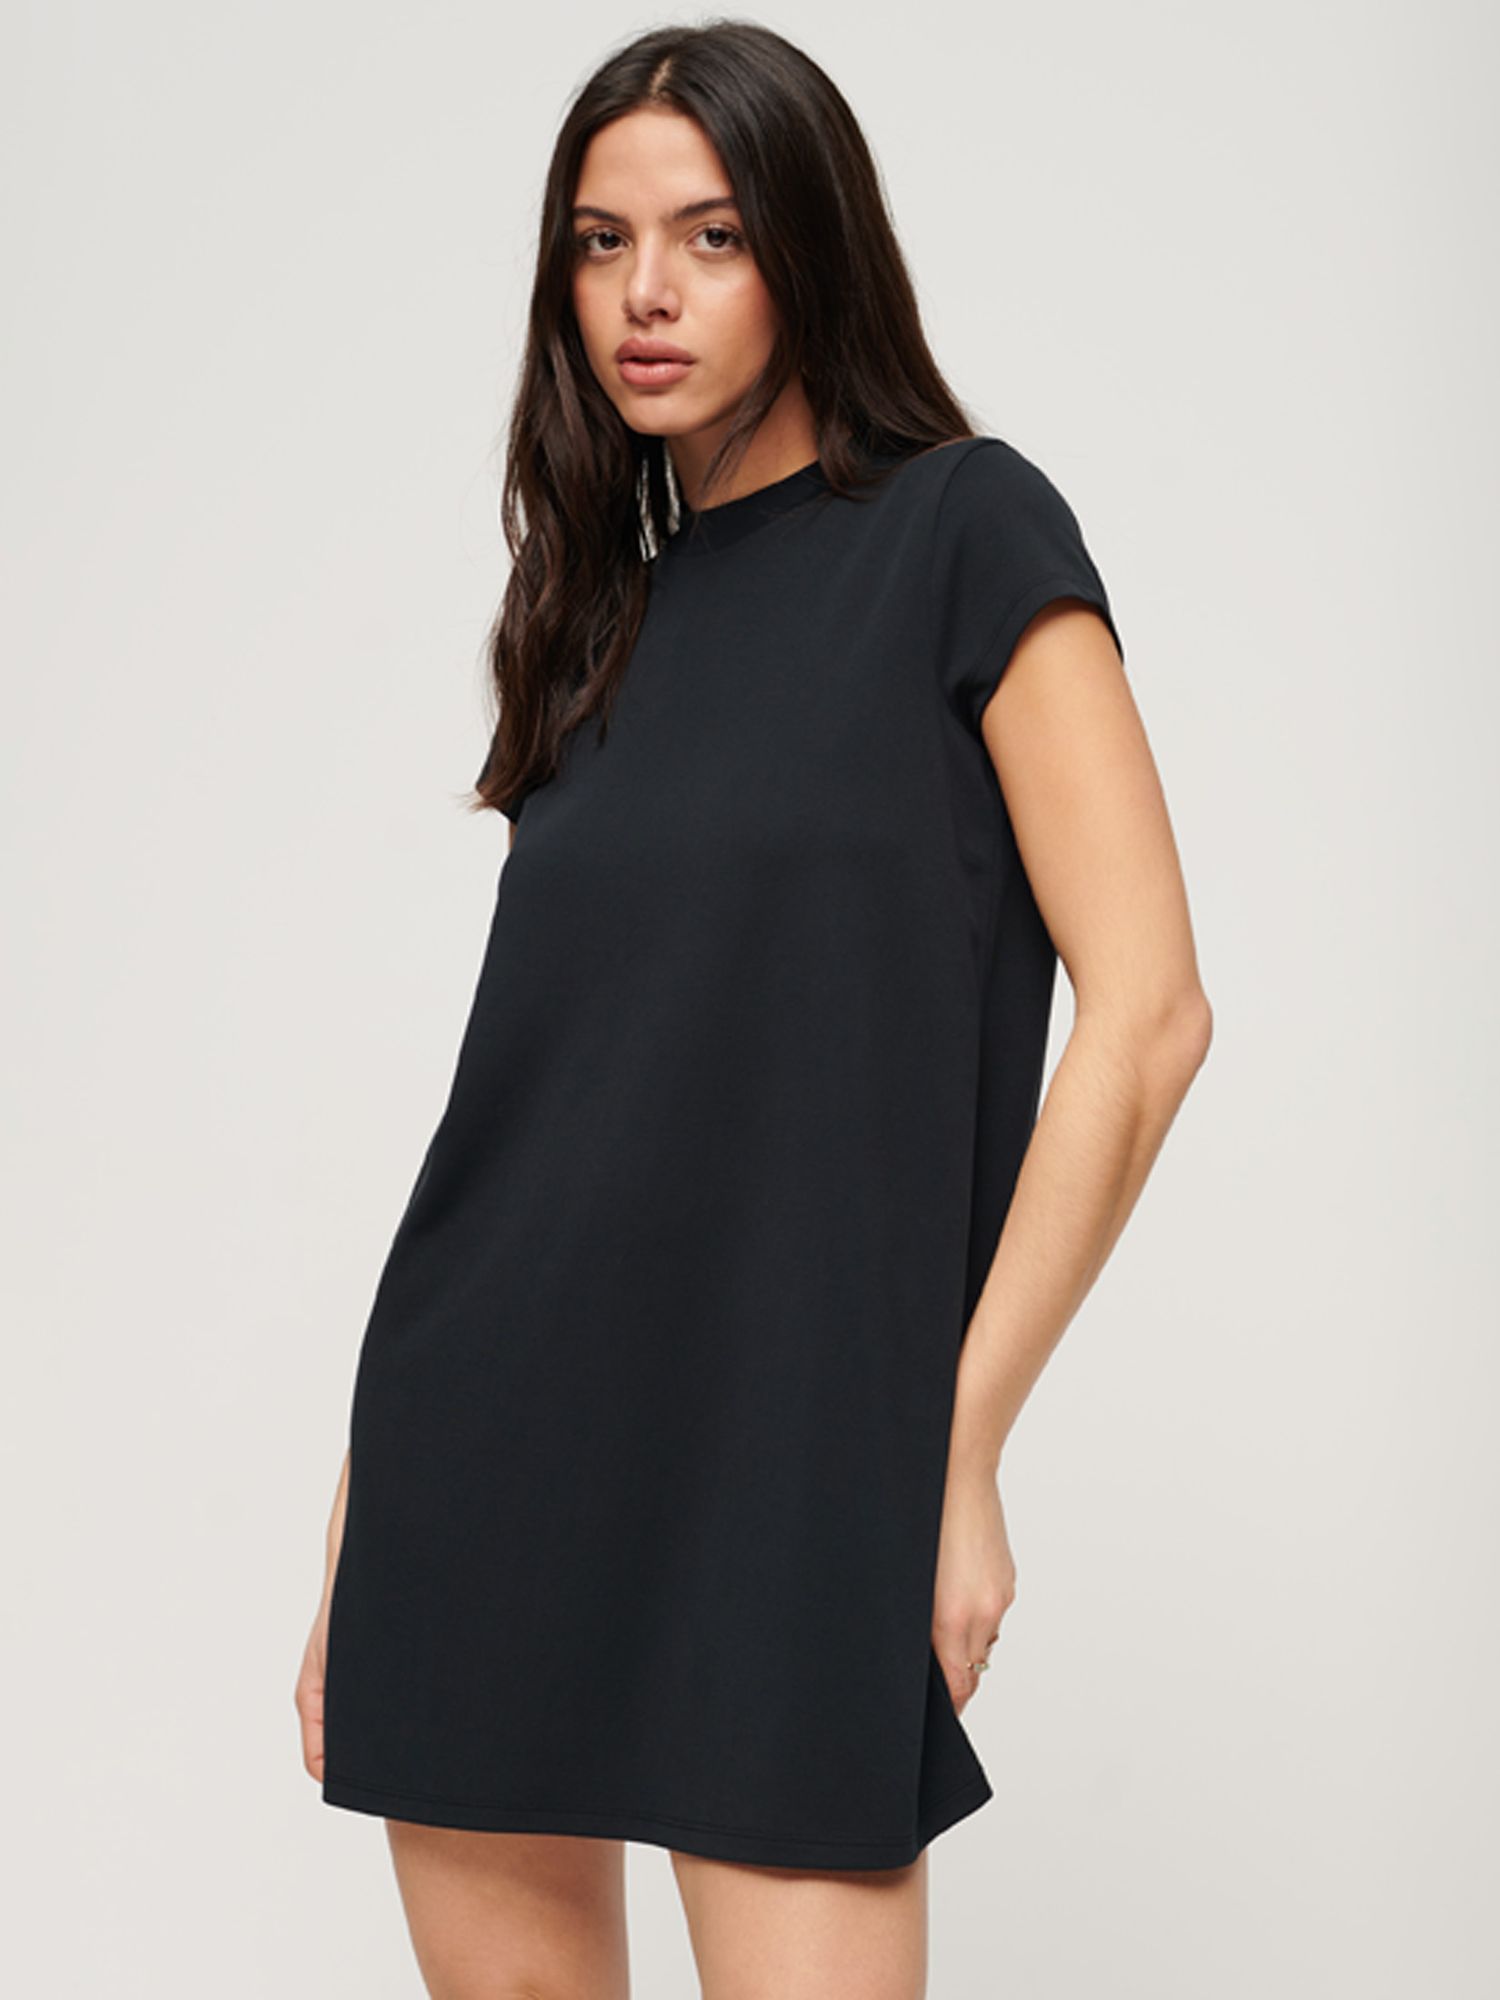 Superdry Short Sleeve A-Line Mini Dress, Black at John Lewis & Partners